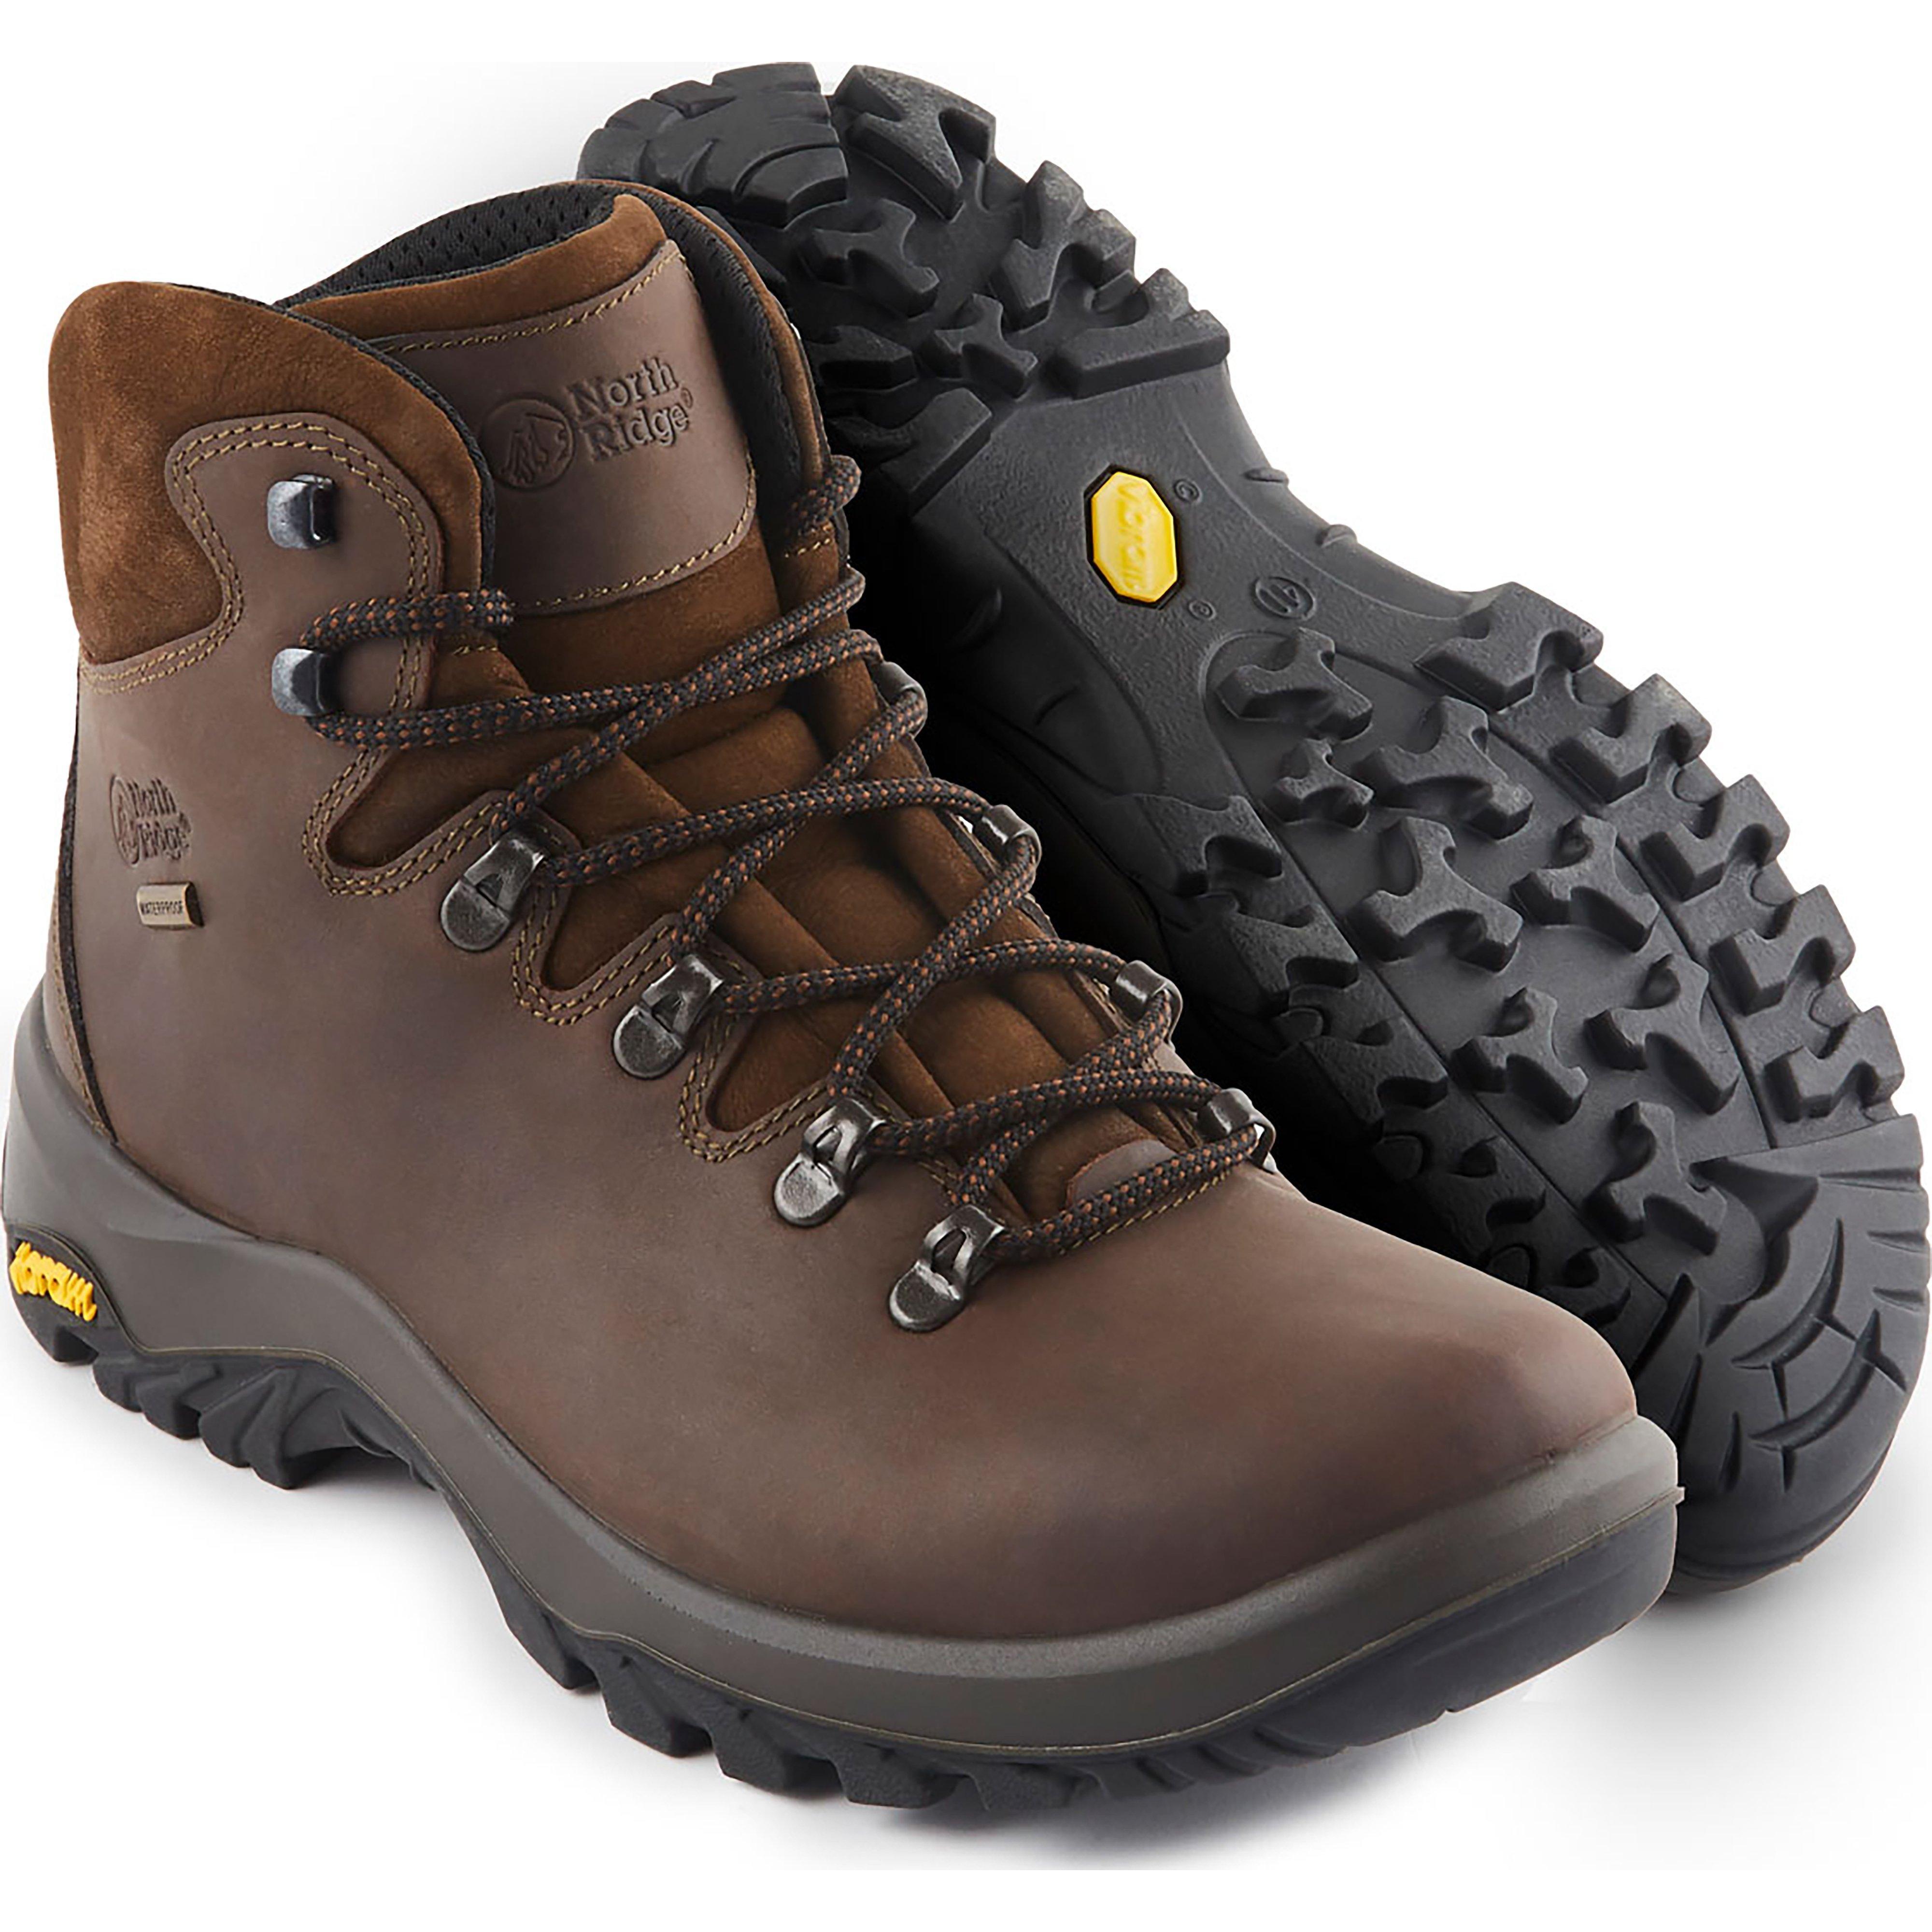 North Ridge Women’s Traverse Comfortable Leather Mid Walking Boots